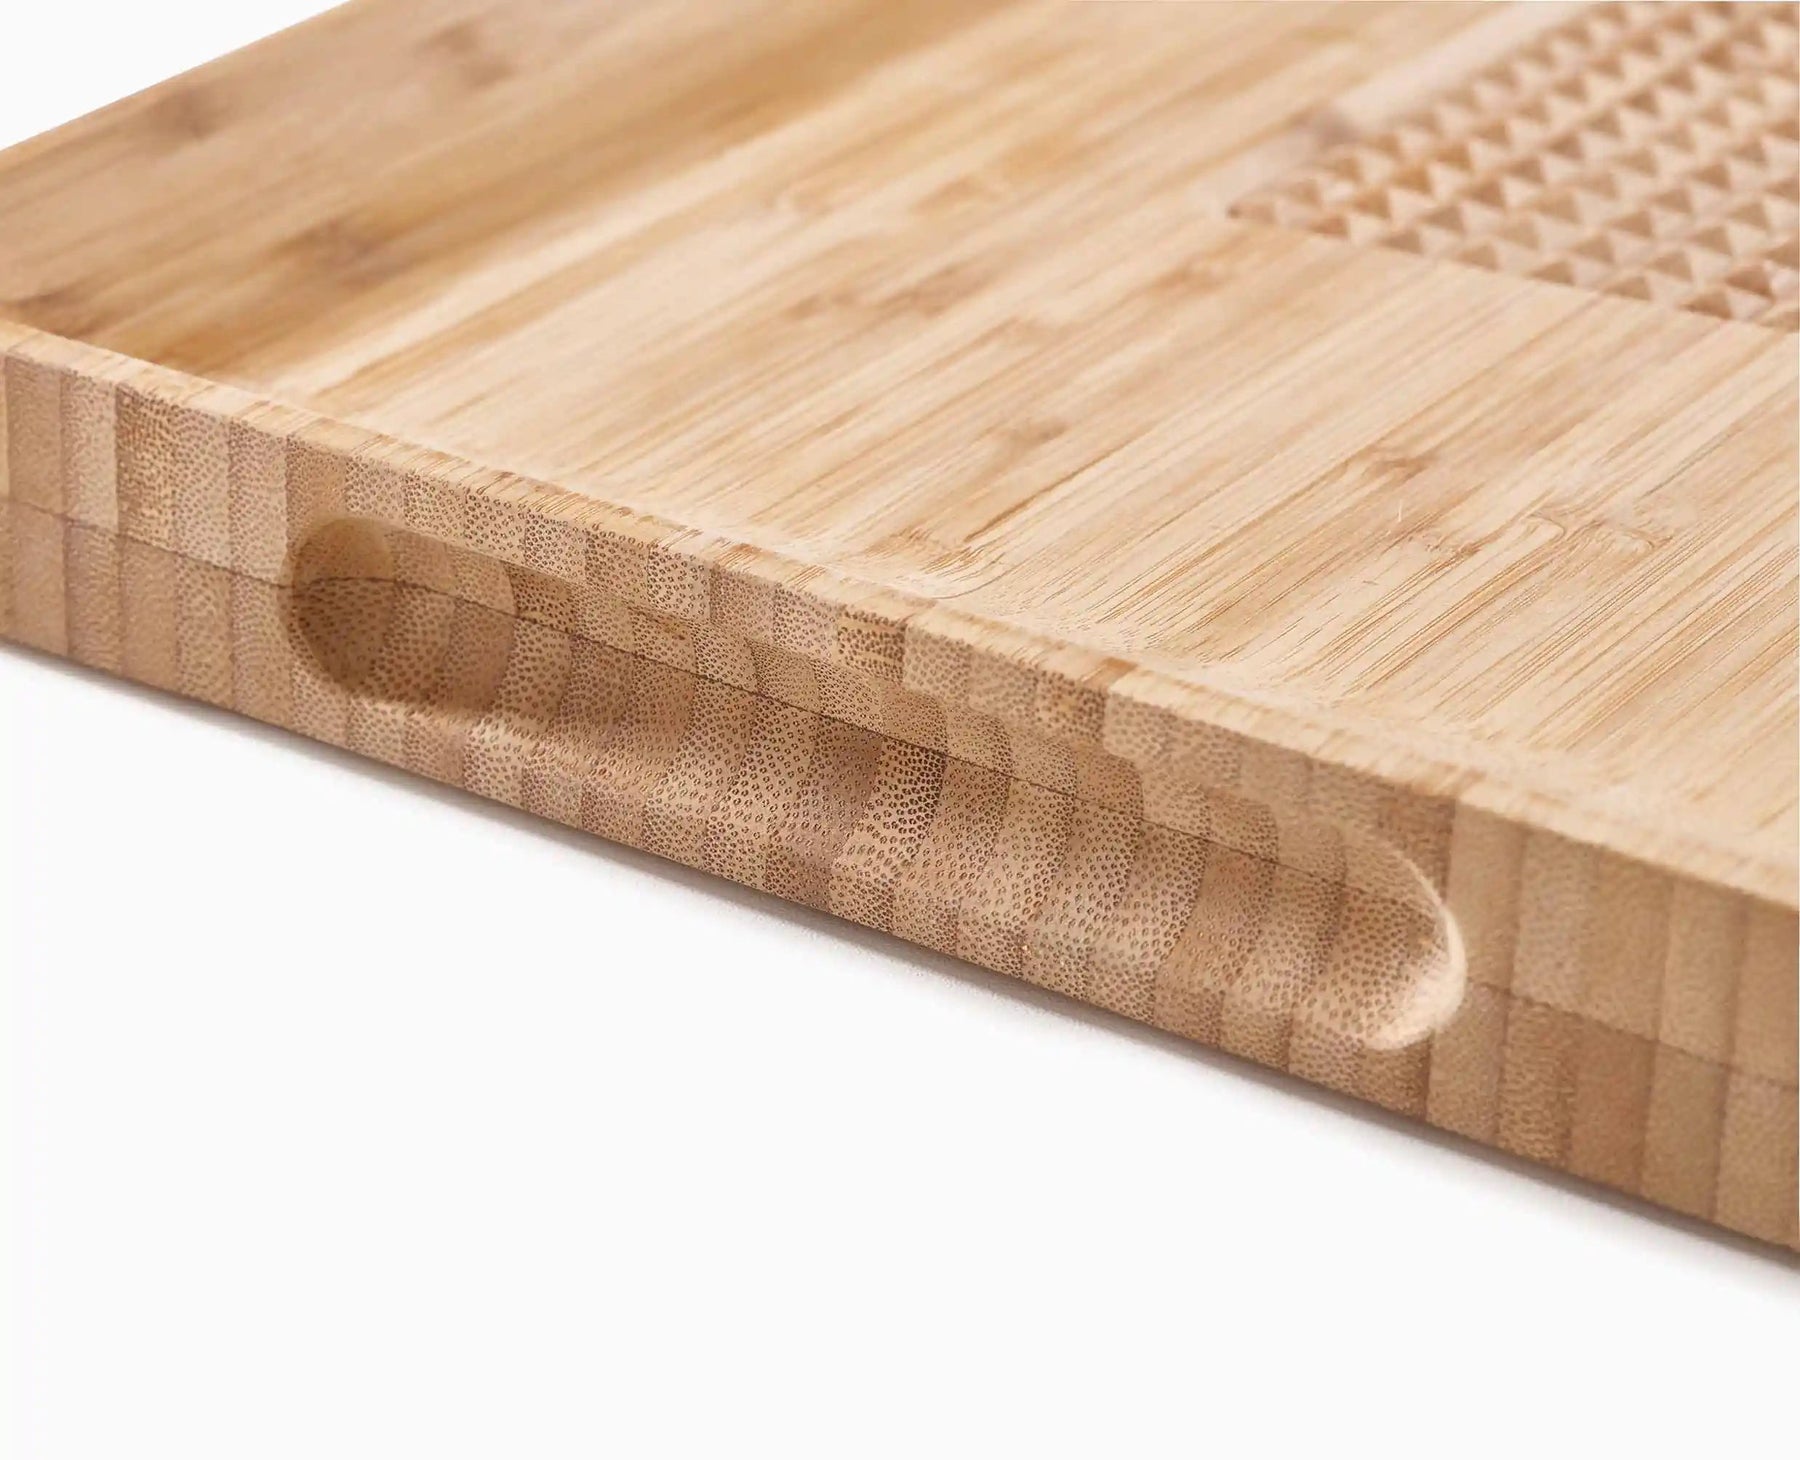 Thin, foldable bamboo cutting board - Joseph Joseph